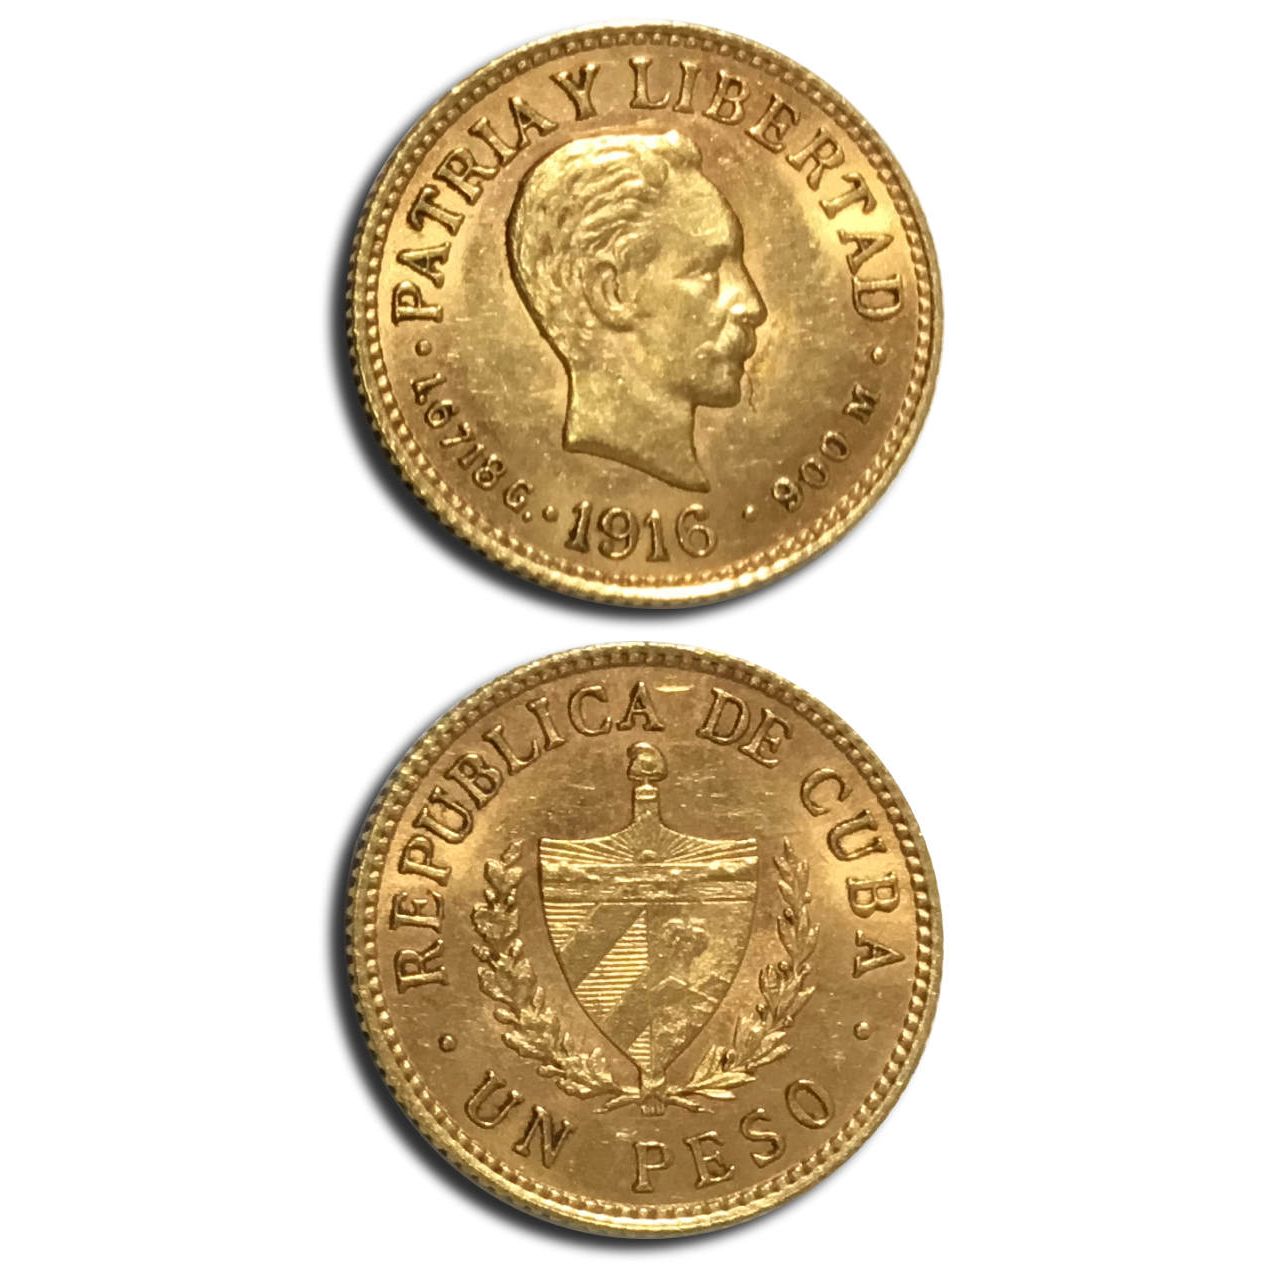 Vintage Cuba Coins > 1916 1 Peso Cuba Gold Coin Ungraded KM# 16 ...